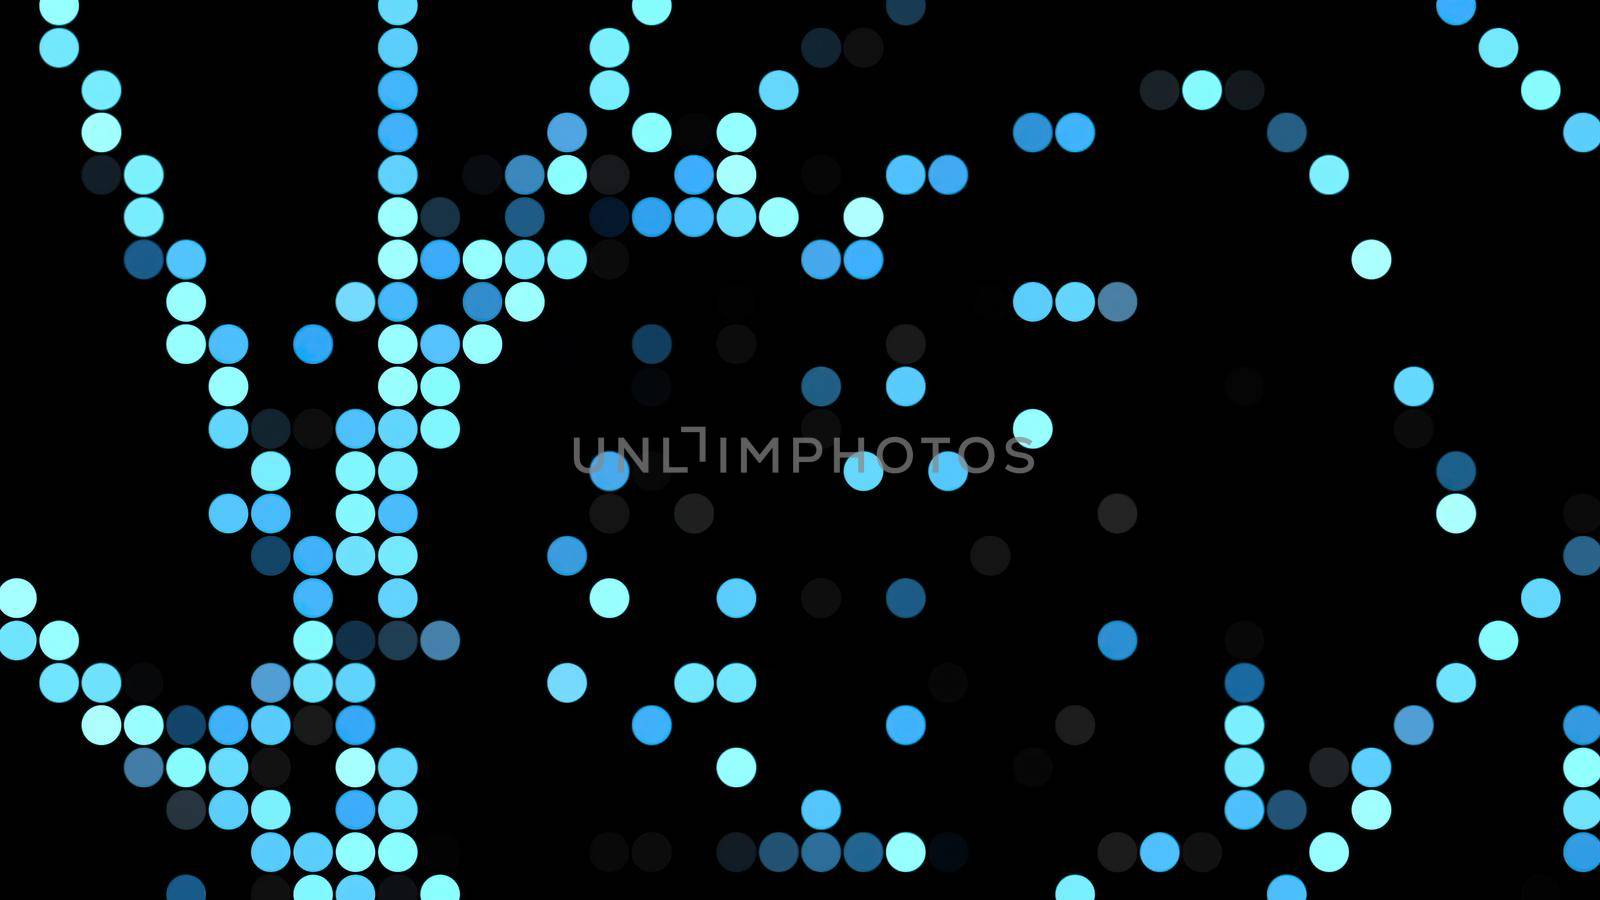 3d illustration - geometrical background with dots  by vitanovski